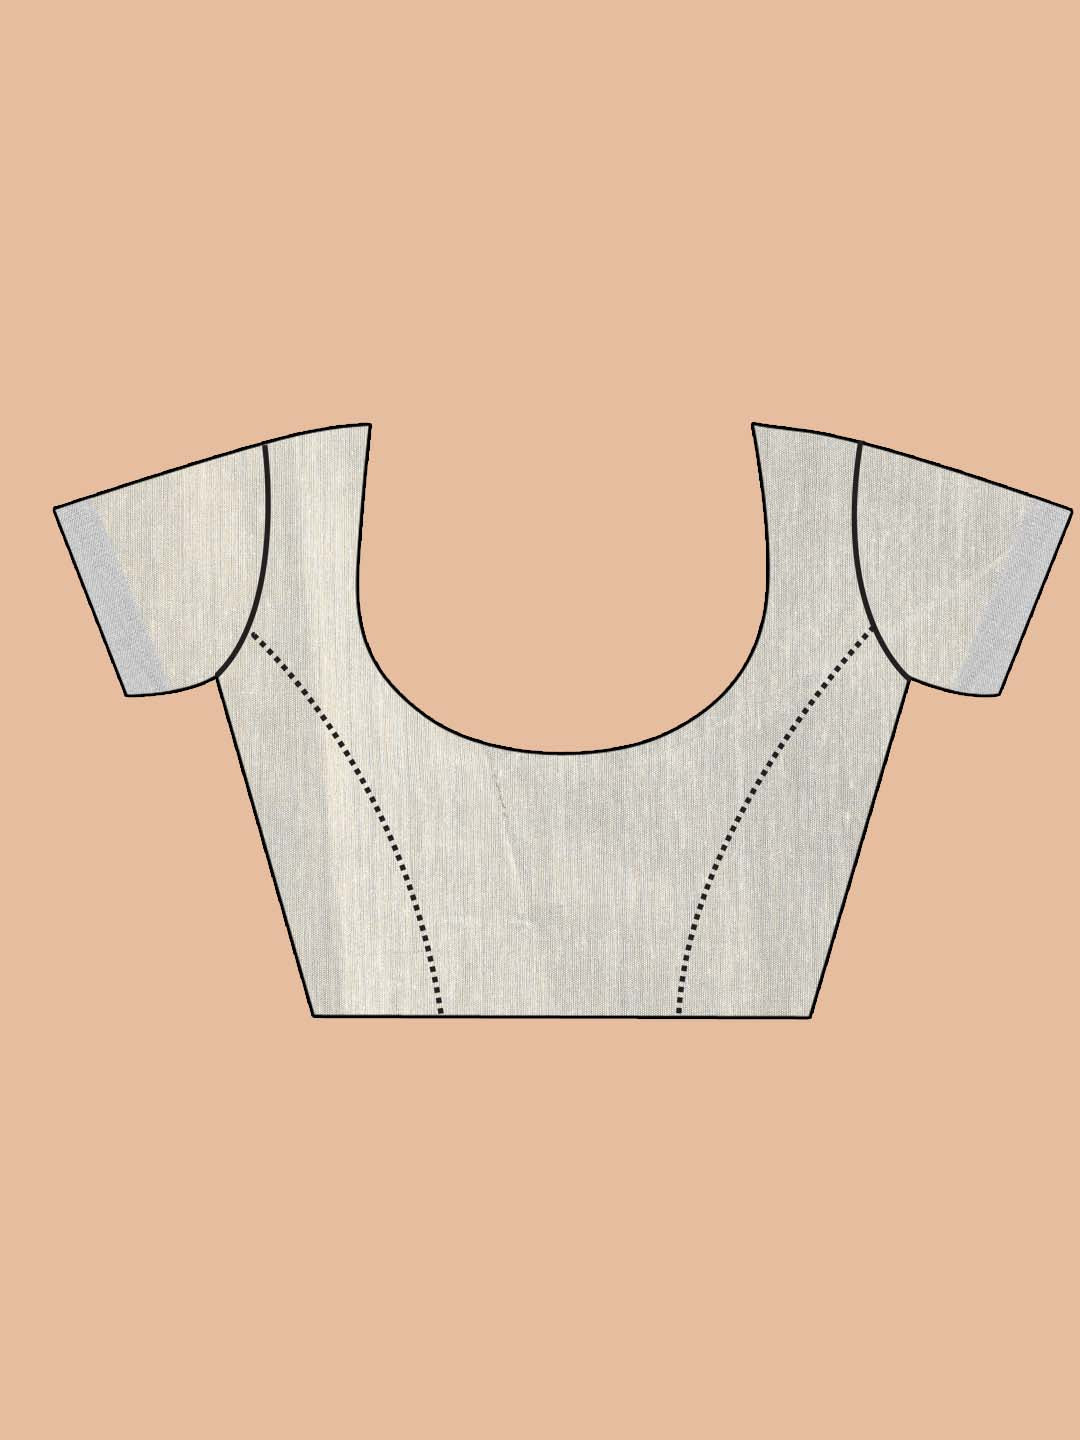 Indethnic Printed Cotton Blend Saree in Grey - Saree Detail View